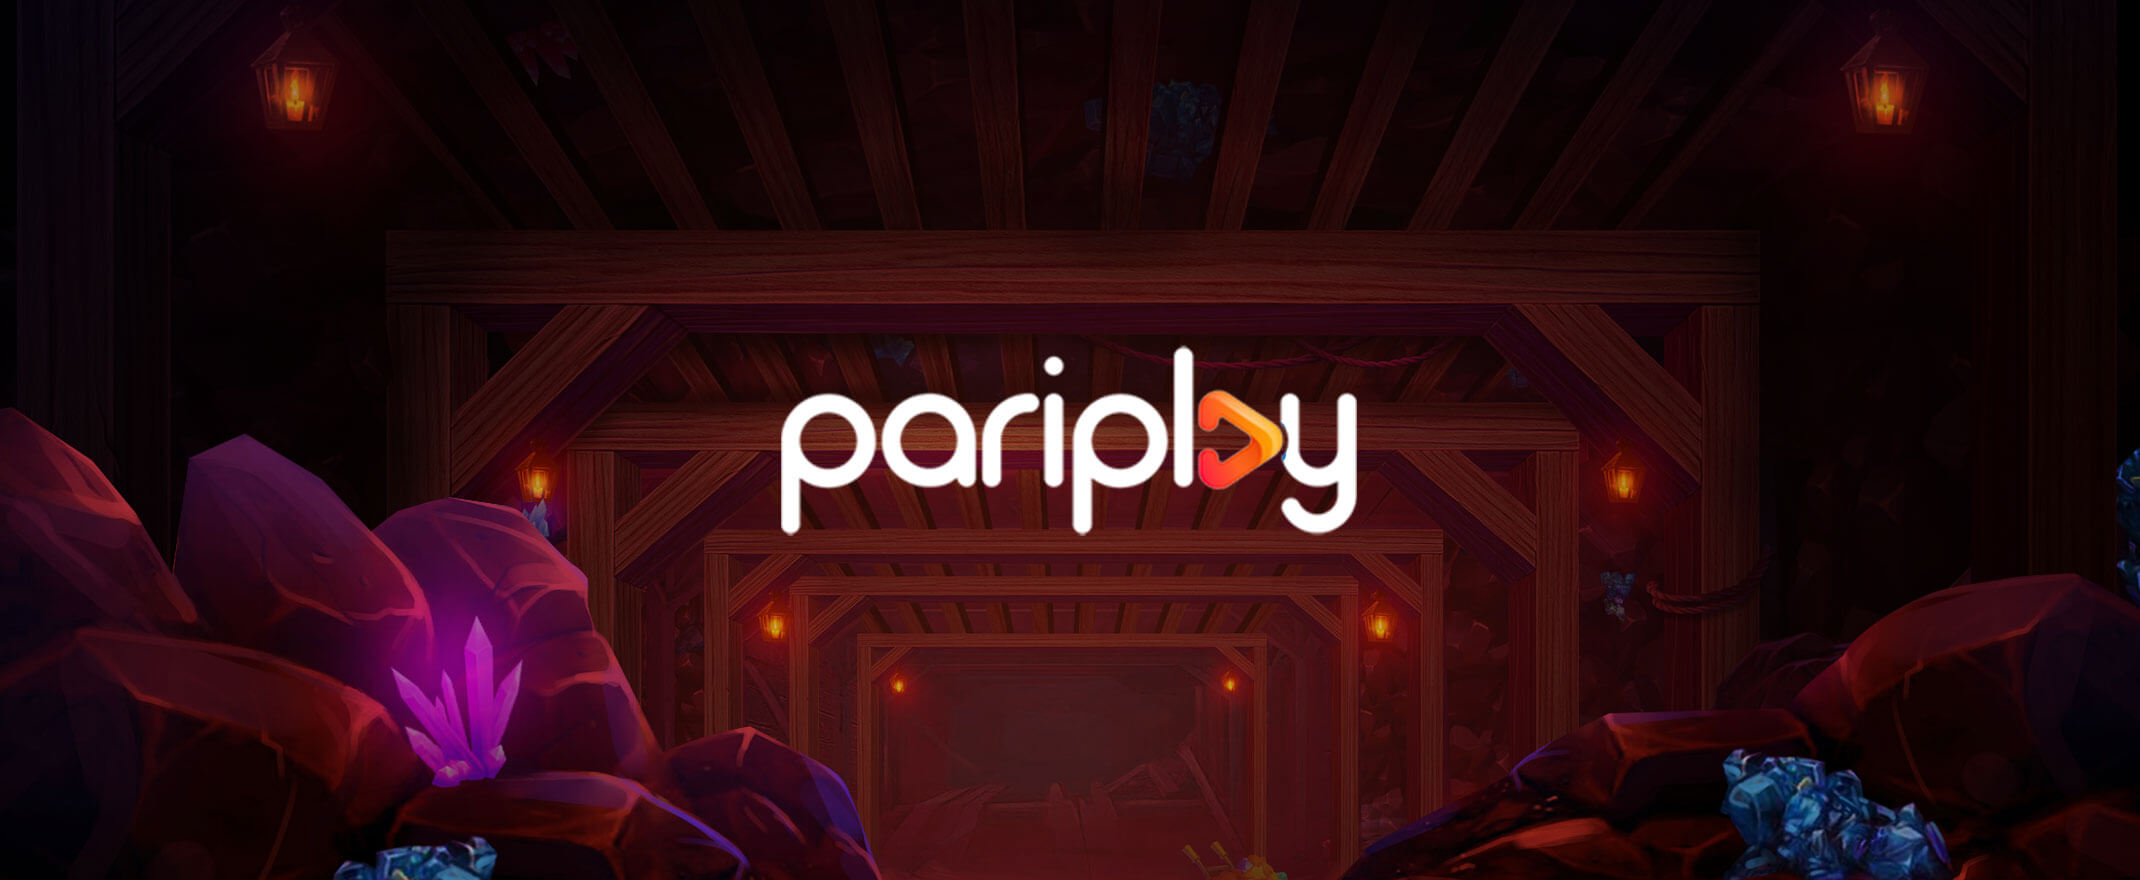 Pariplay logo on purple background